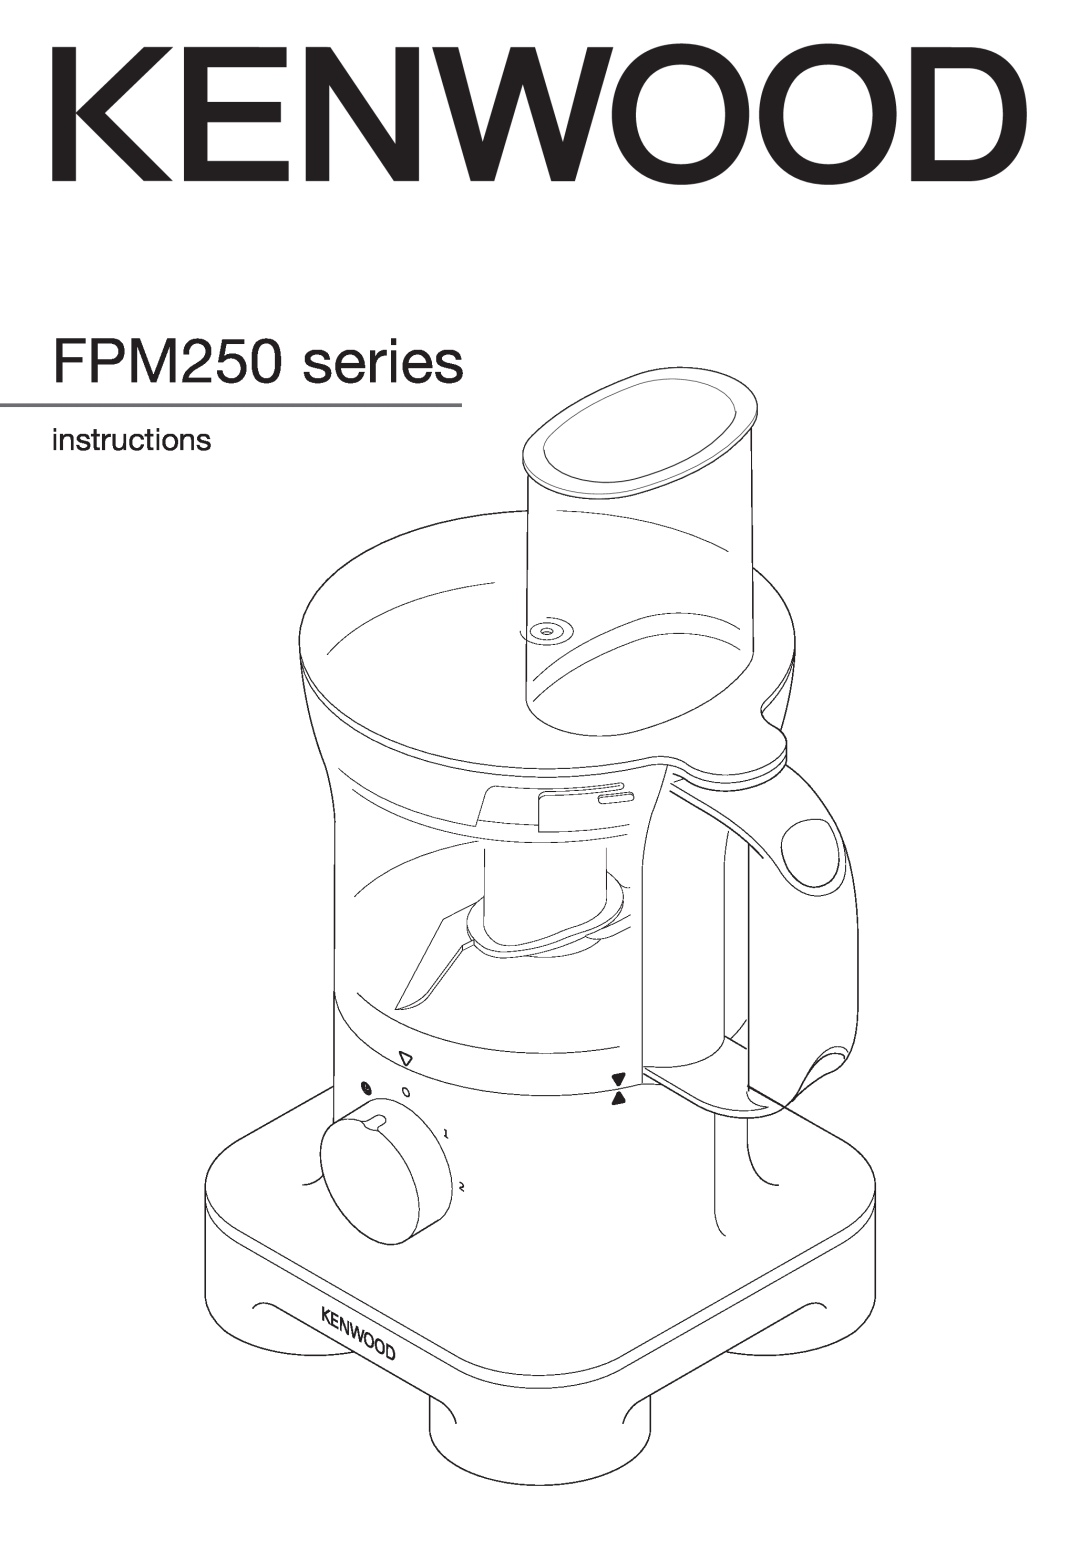 Kenwood manual FPM250 series, instructions 